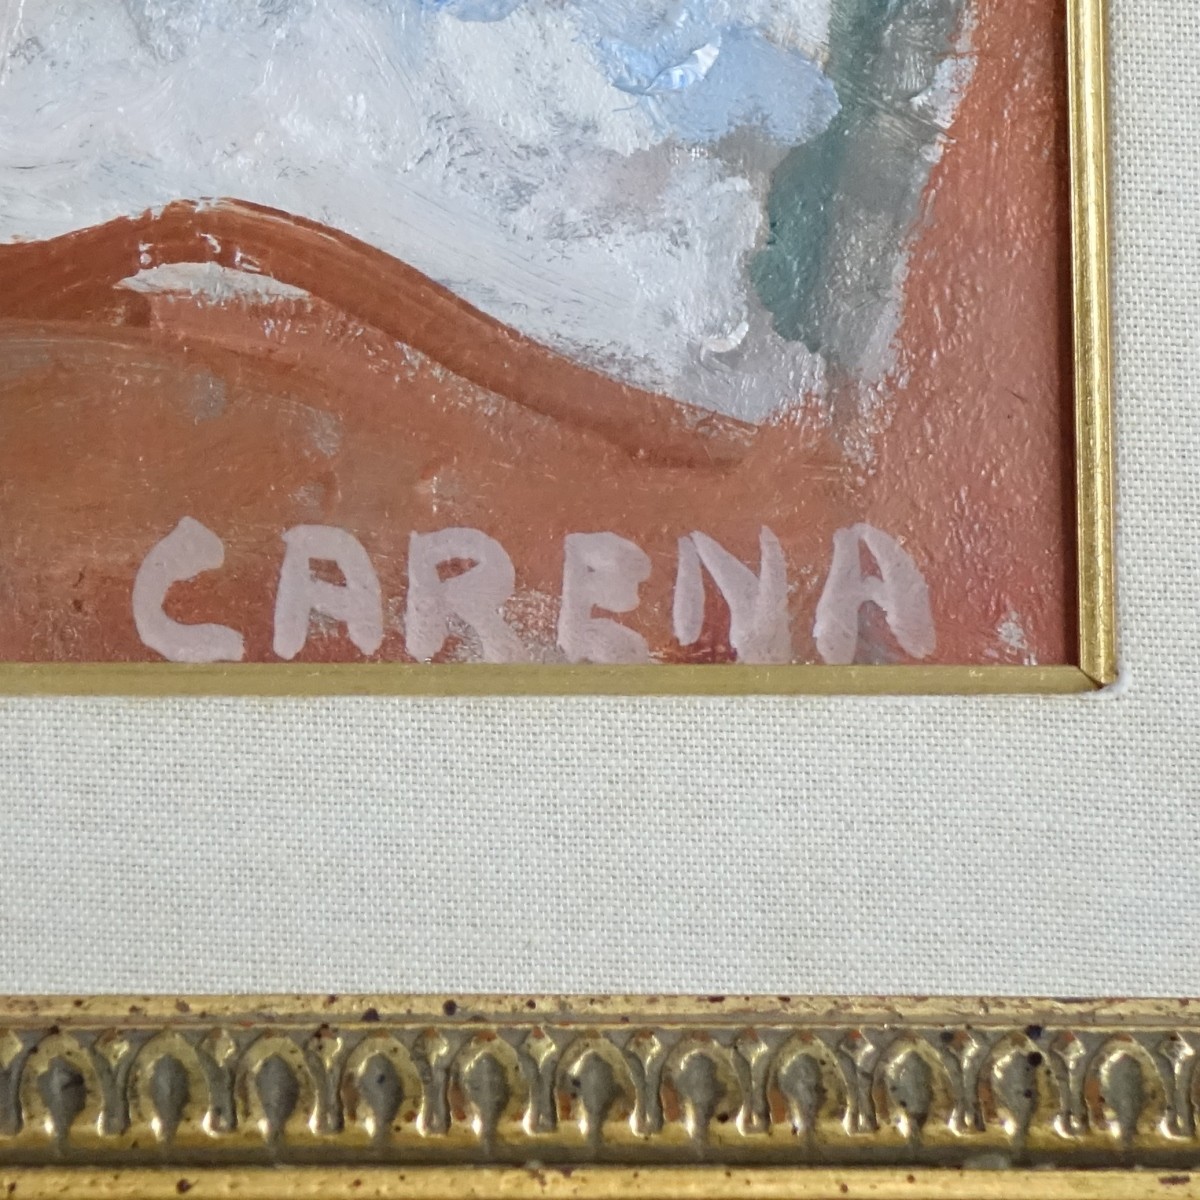 Felice Carena, Italian (1879 - 1966)